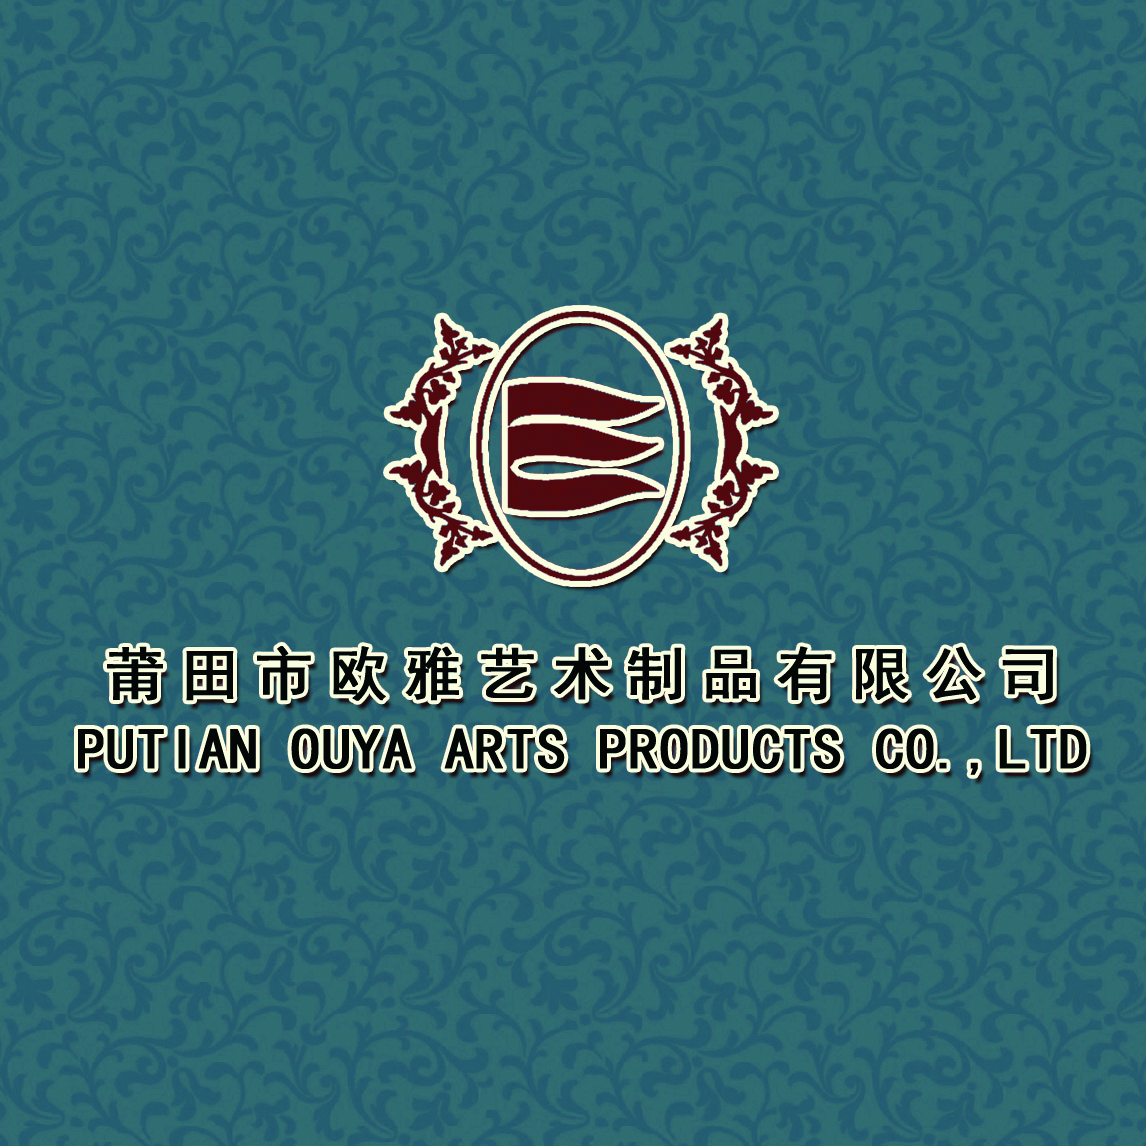 PUTIAN OUYA ARTS PRODUCTS CO., LTD.